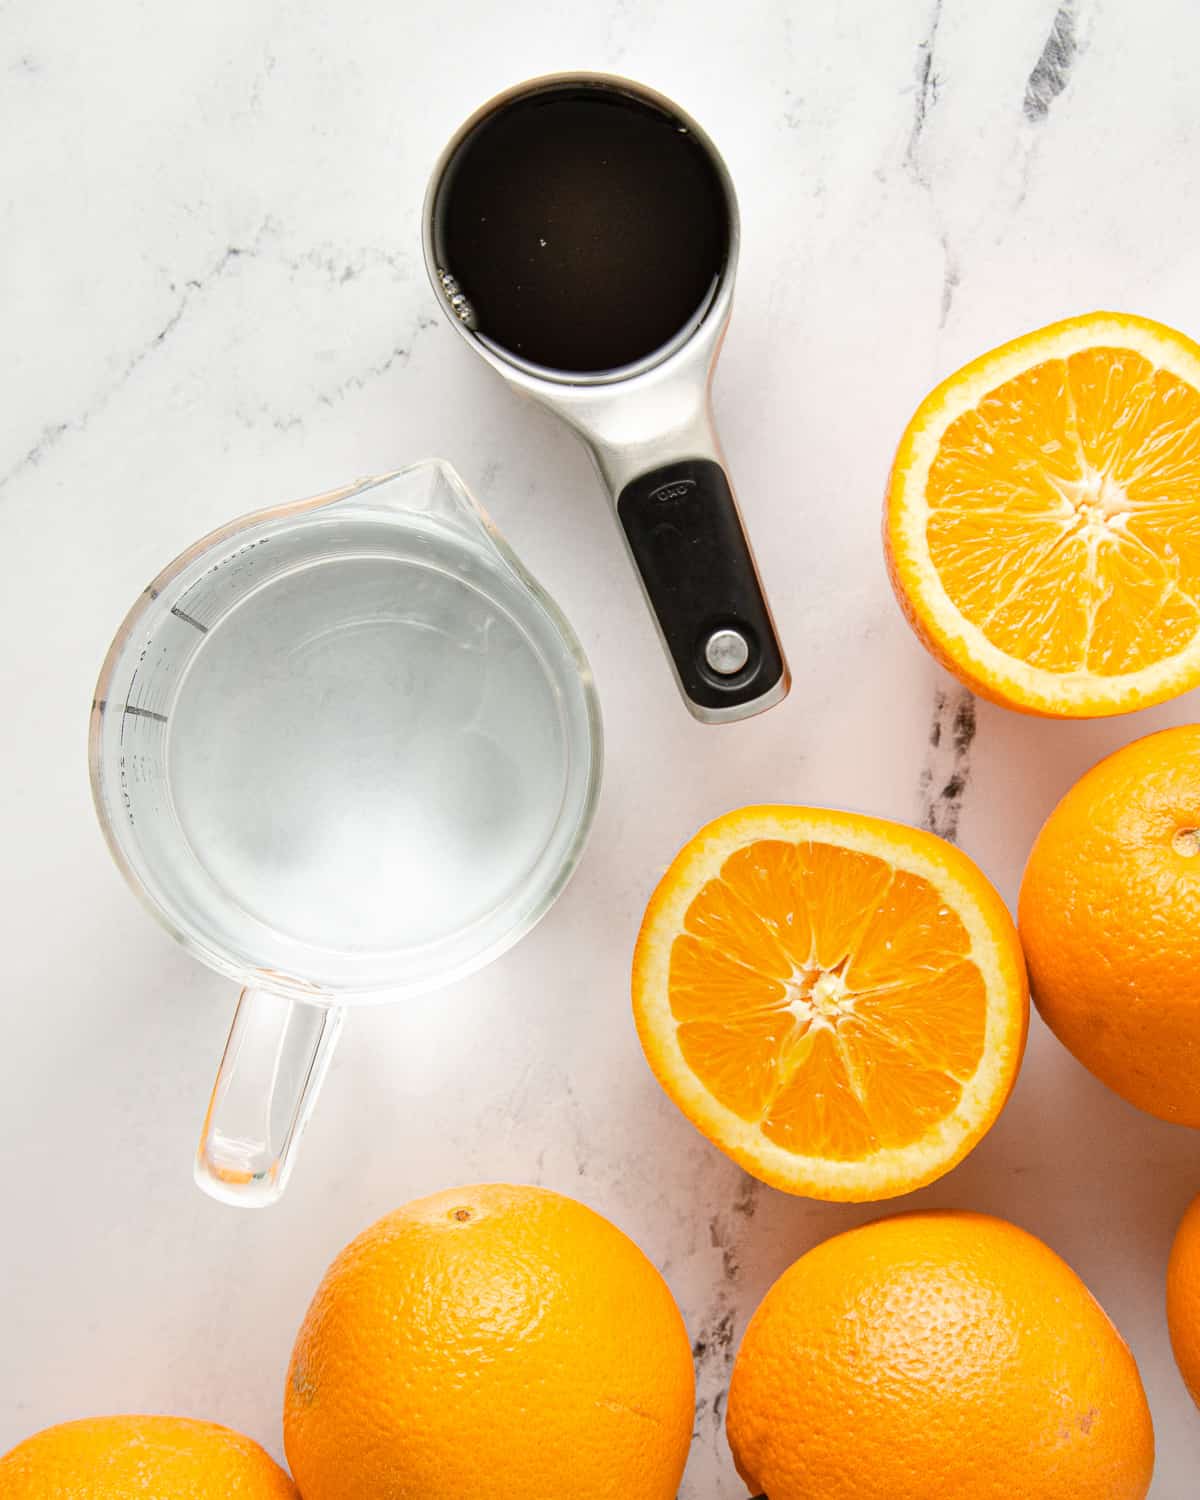 Ingredients to make orange agua fresca: oranges, water and honey.